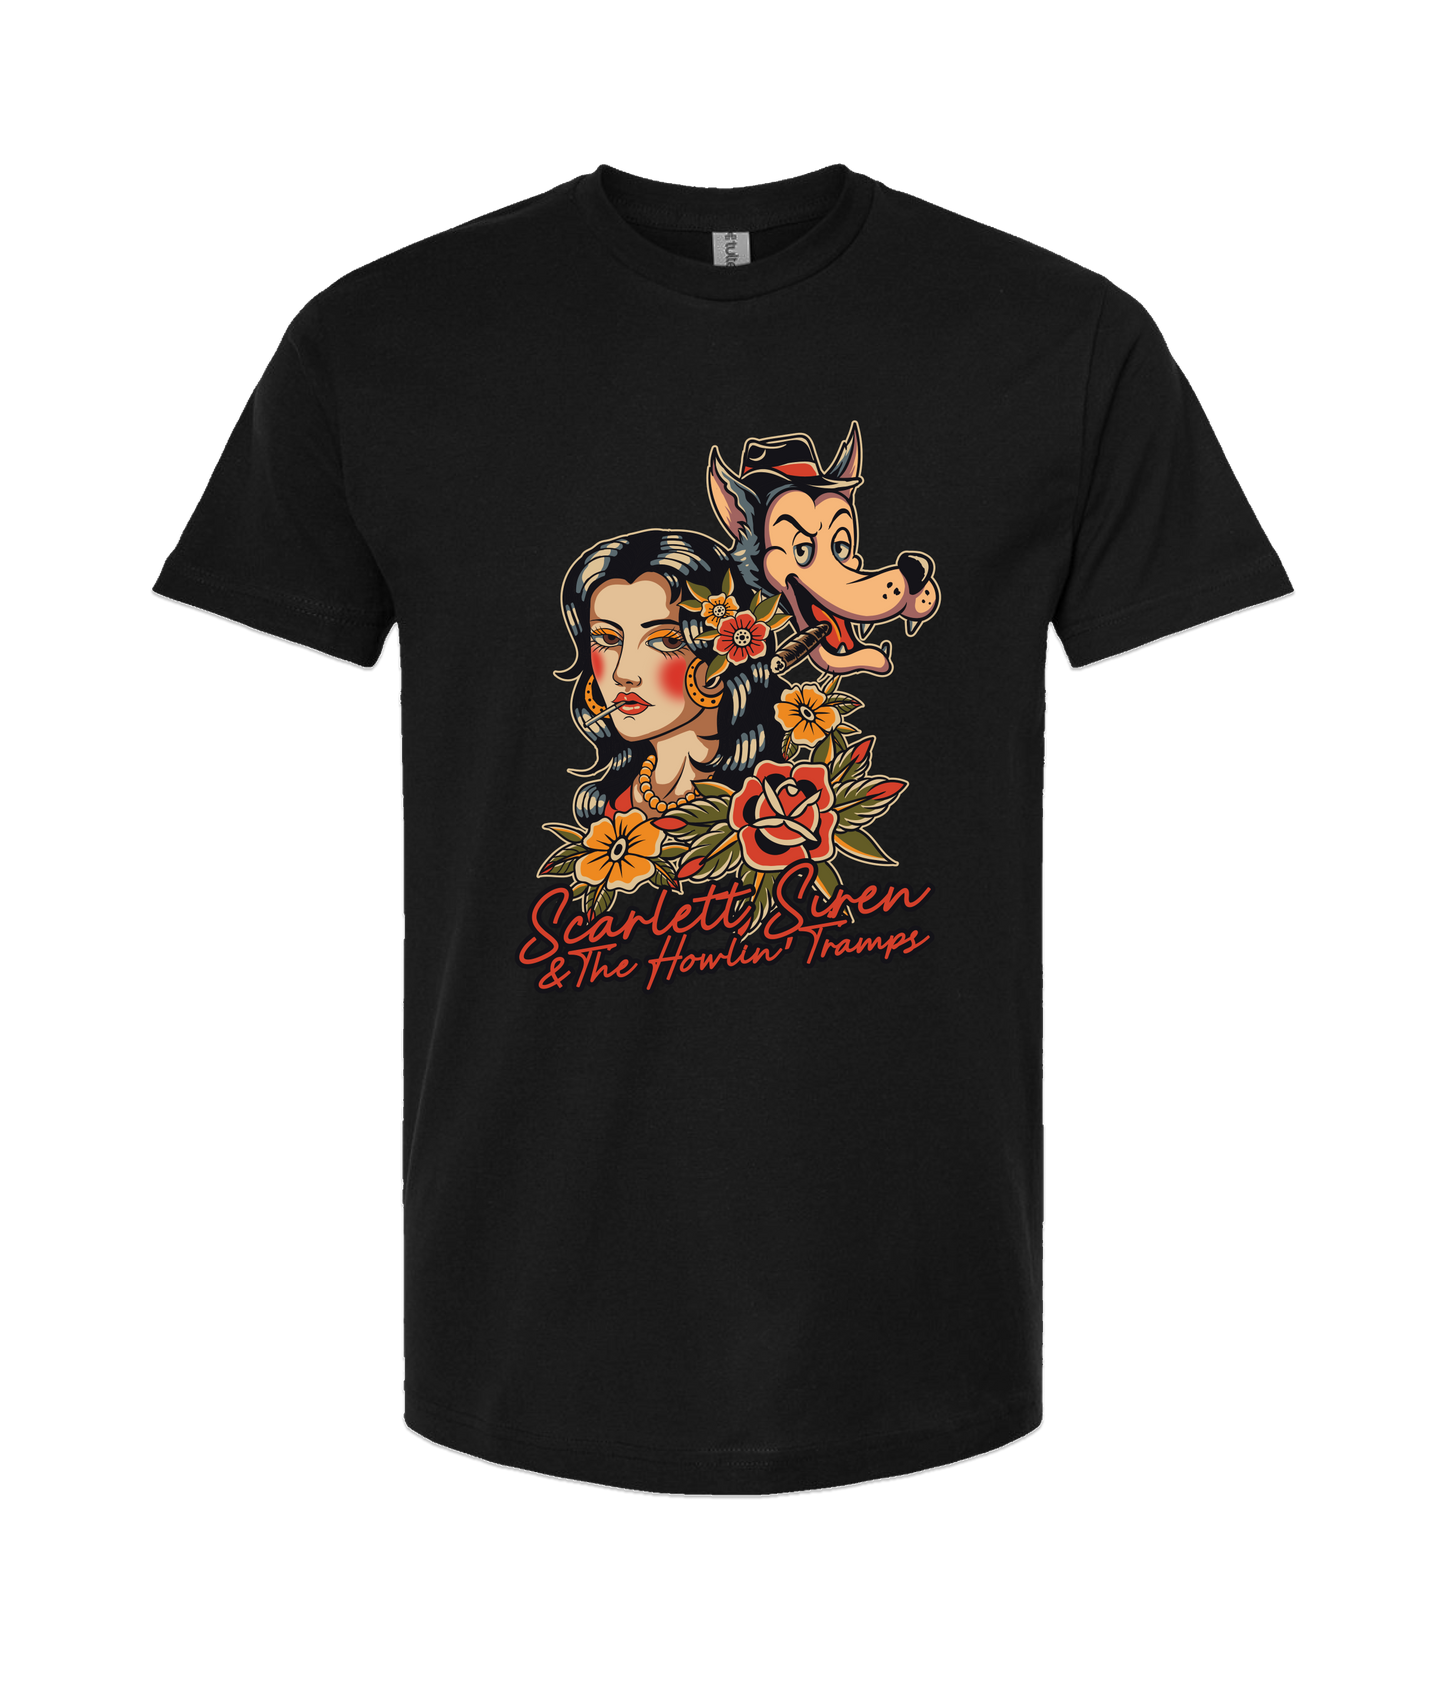 Scarlett Siren & The Howlin' Tramps - DESIGN 1 - Black T Shirt